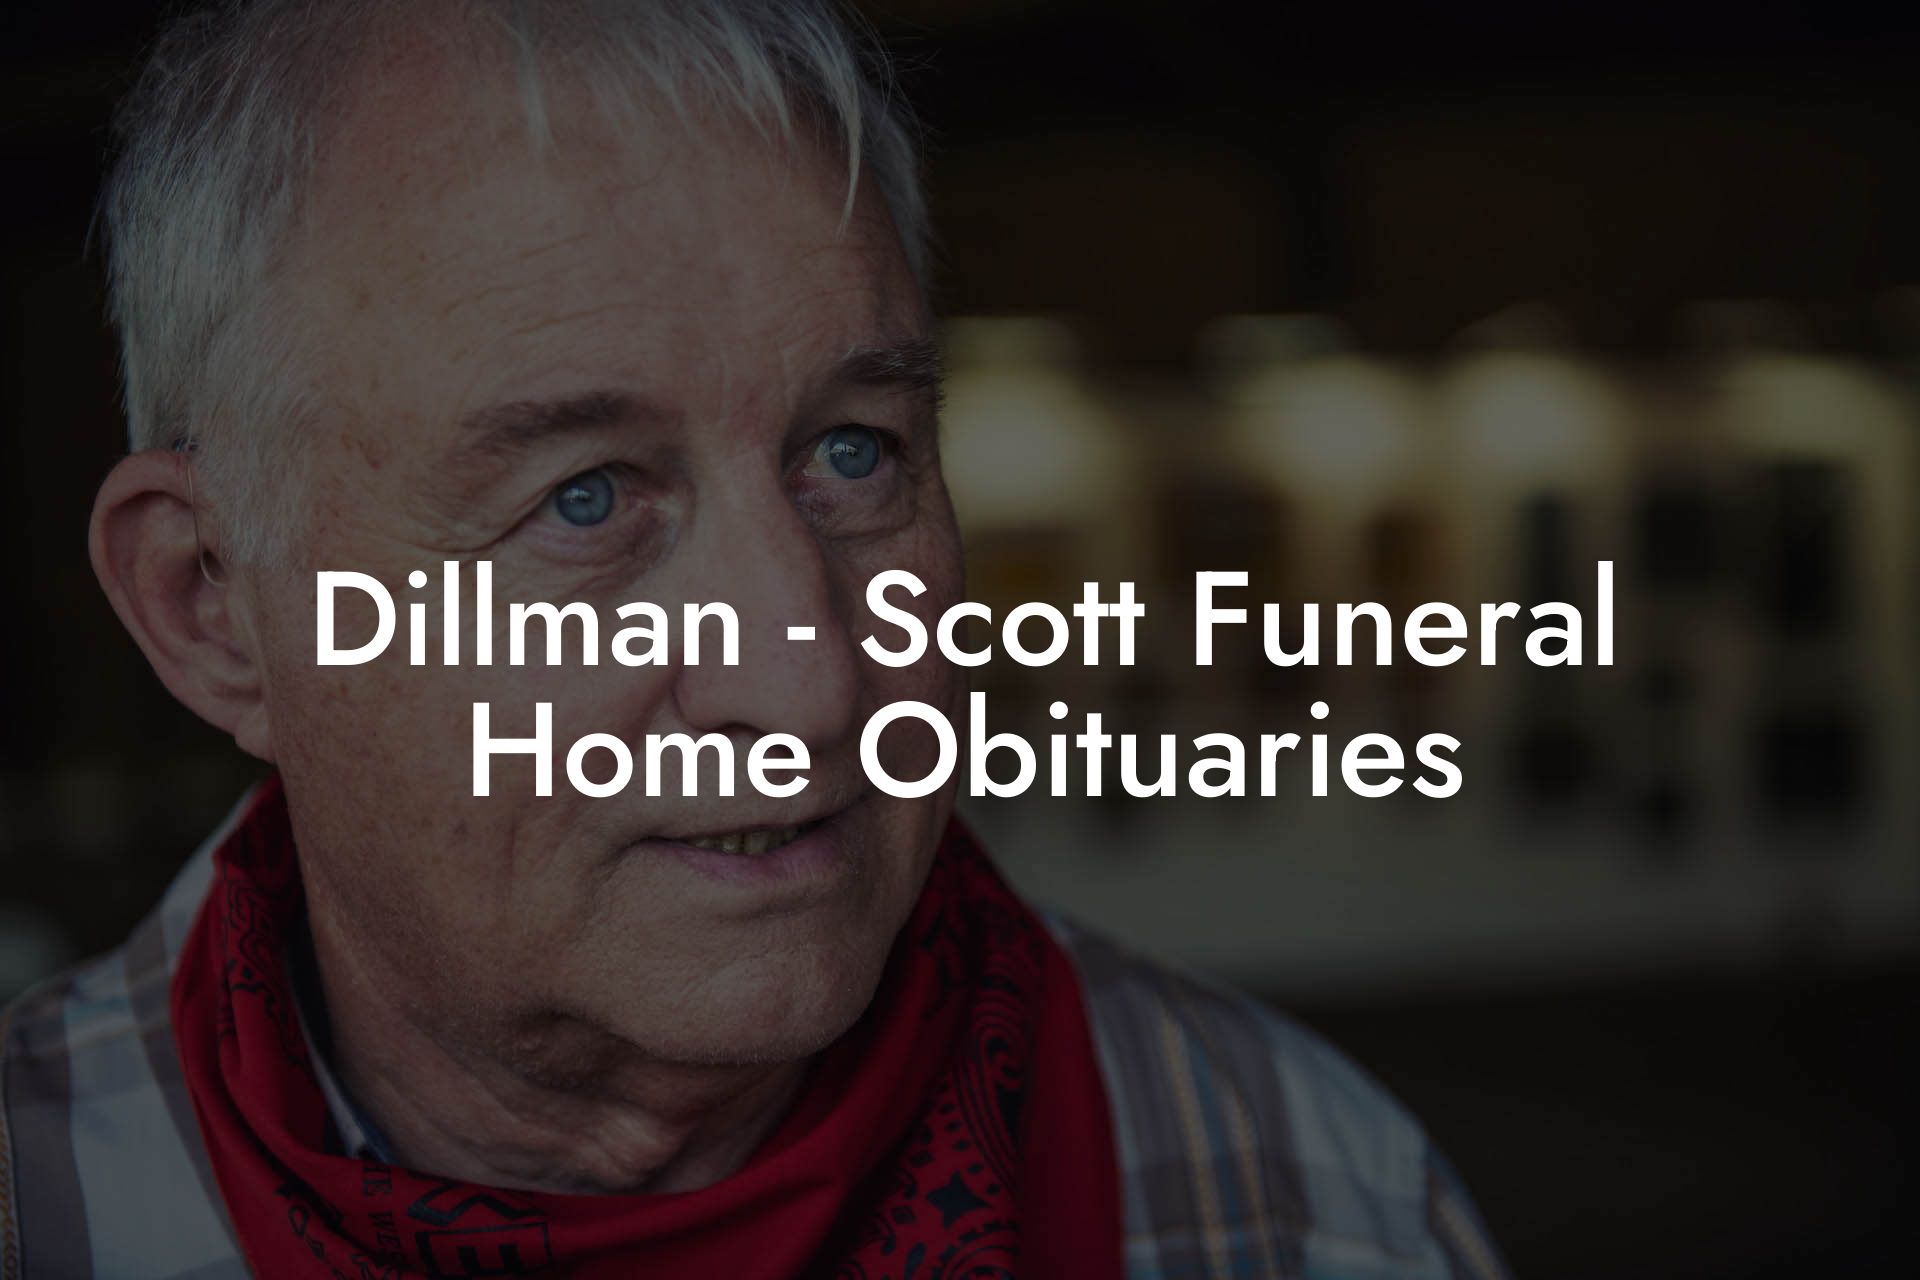 Dillman - Scott Funeral Home Obituaries